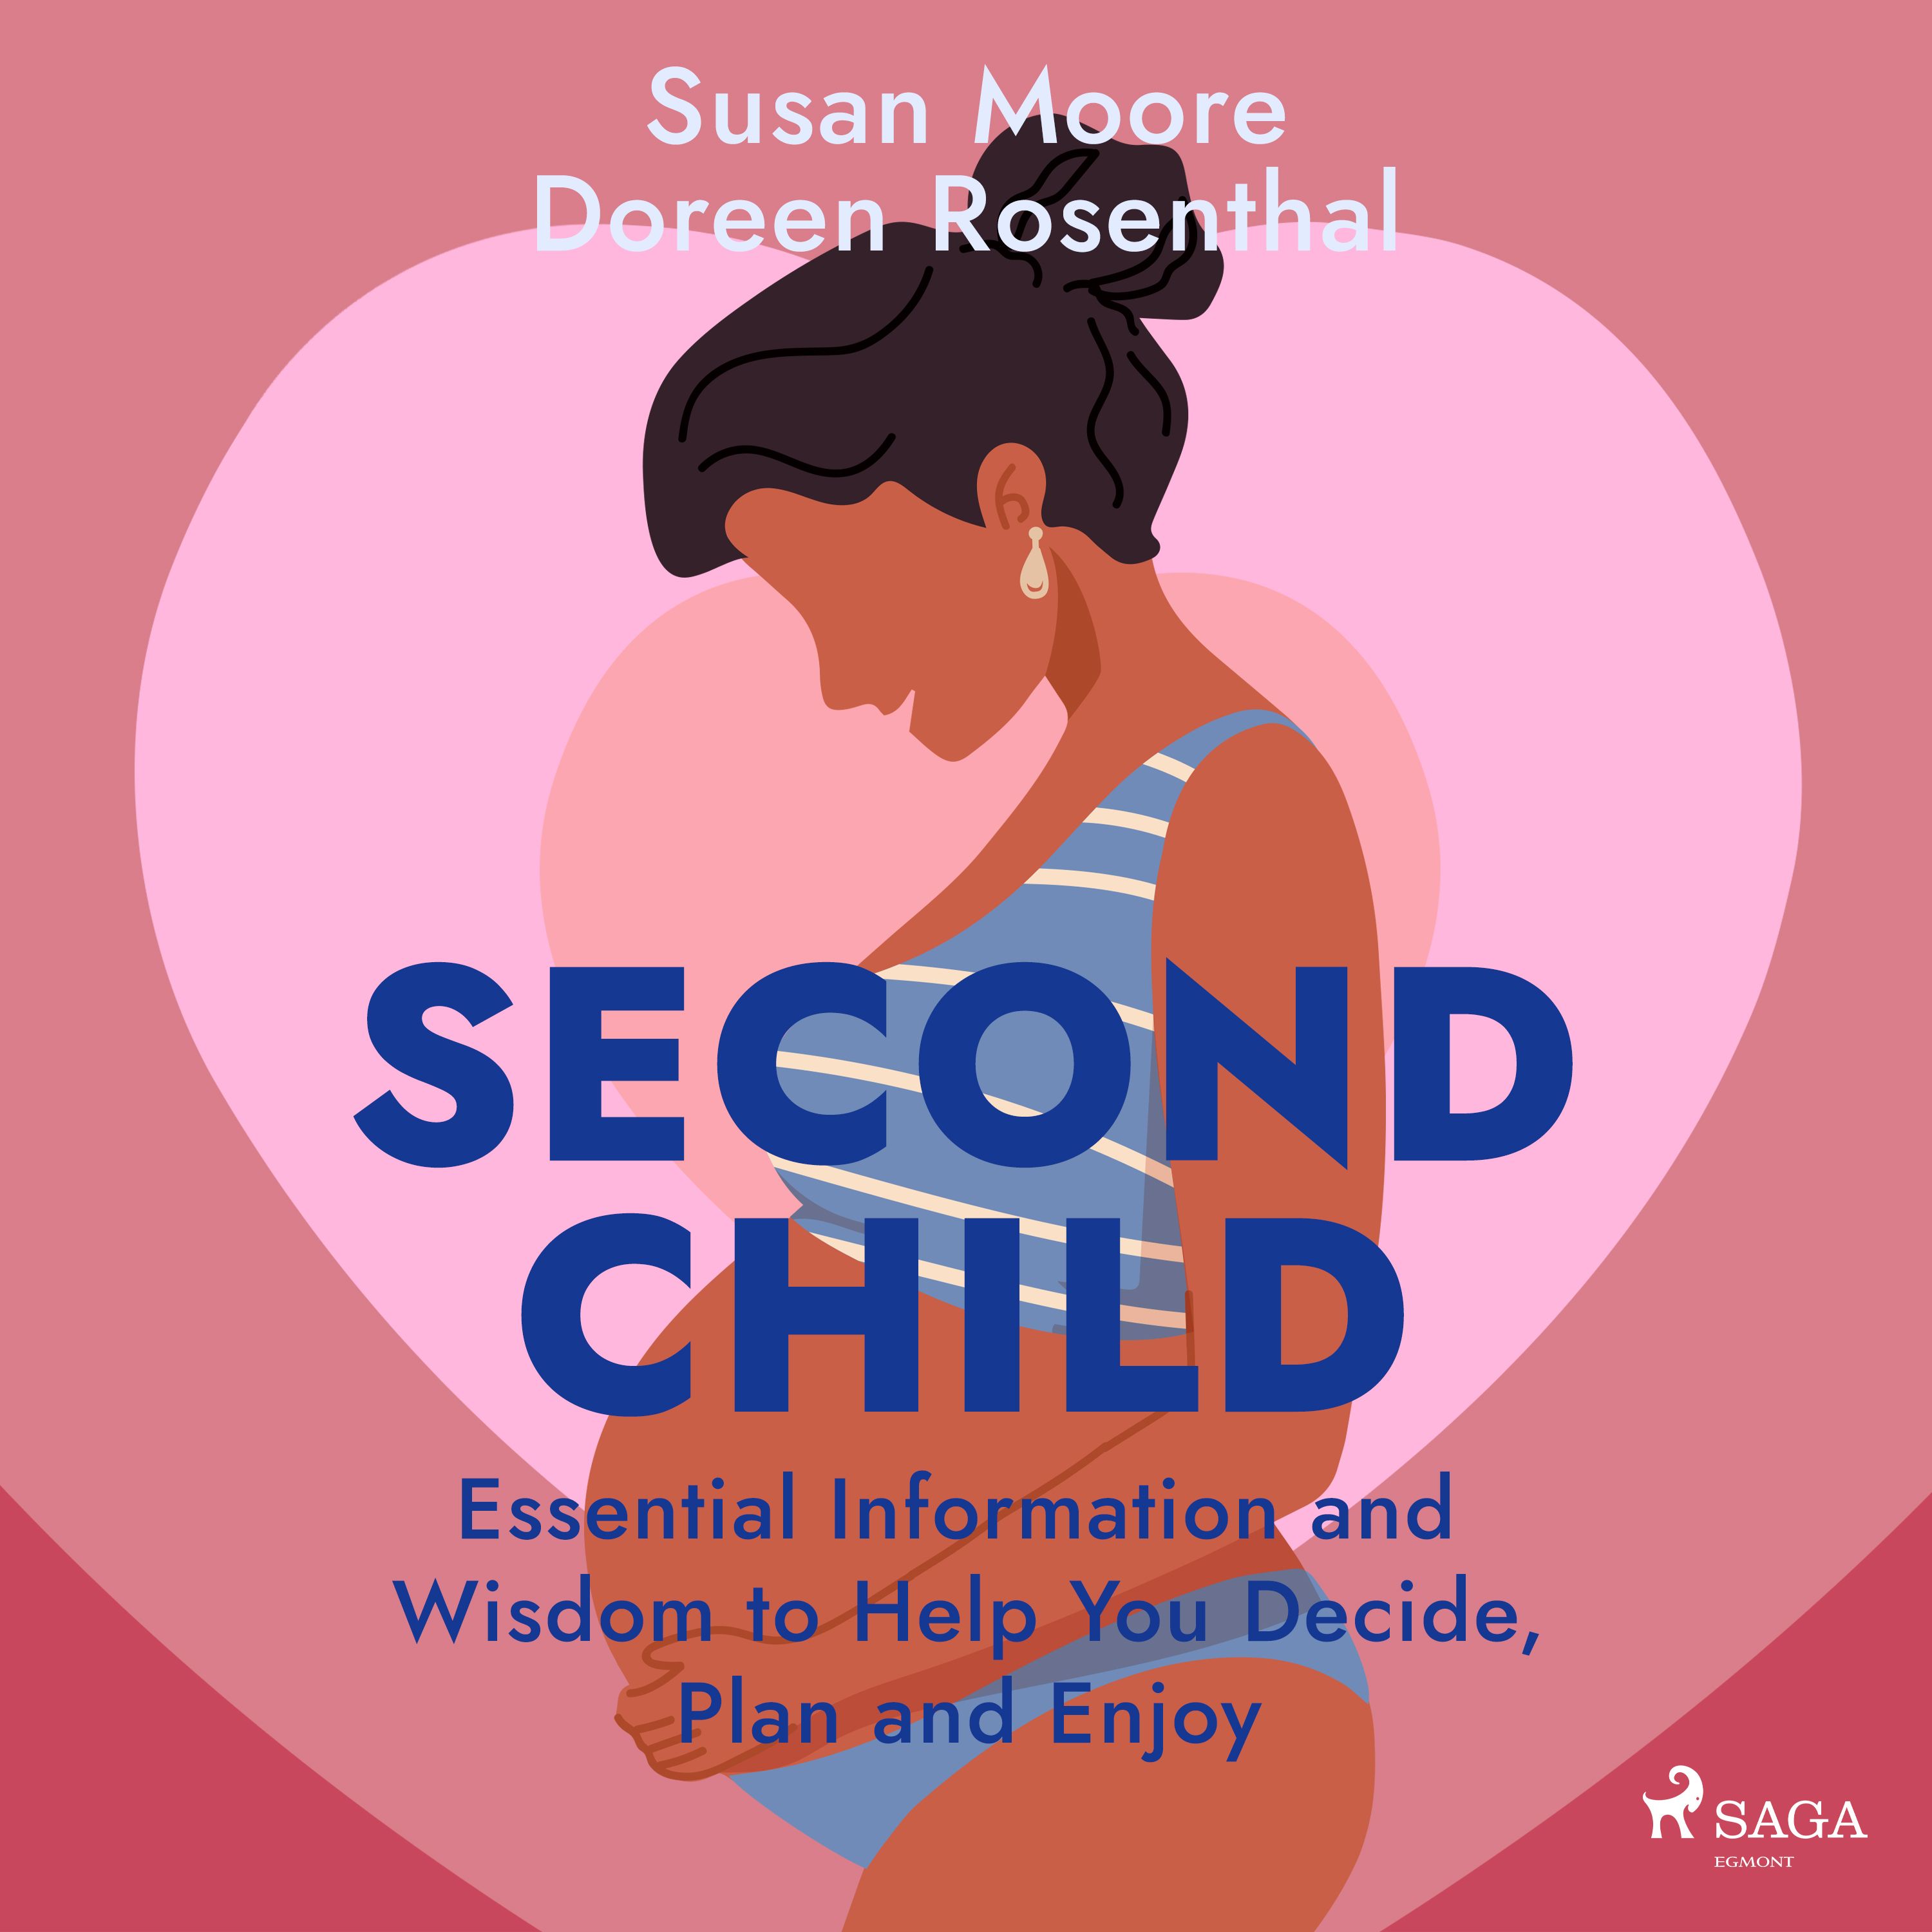 Second Child: Essential Information and Wisdom to Help You Decide, Plan and Enjoy, lydbog af Susan Moore, Doreen Rosenthal